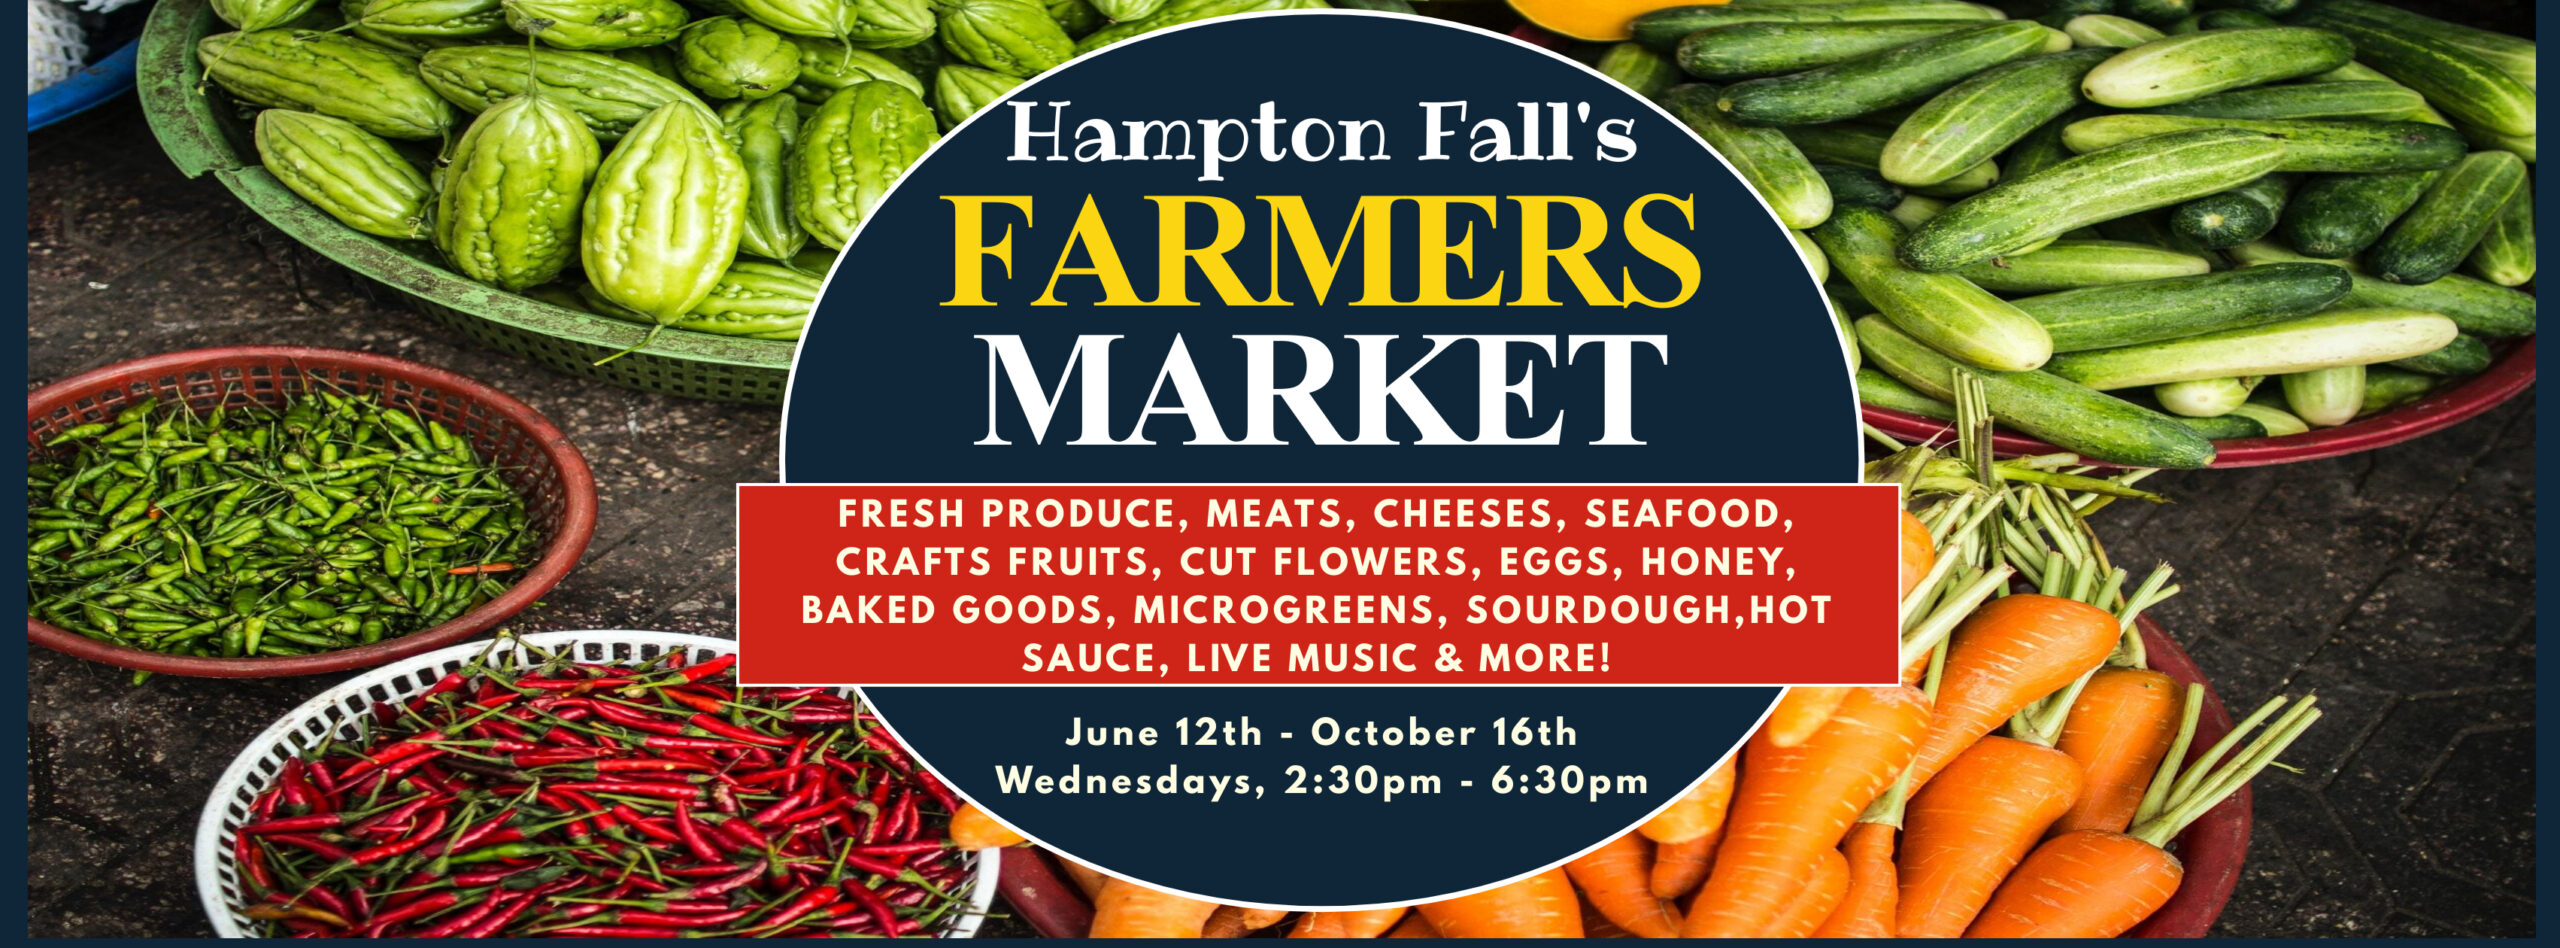 Hampton Falls Farmers Market